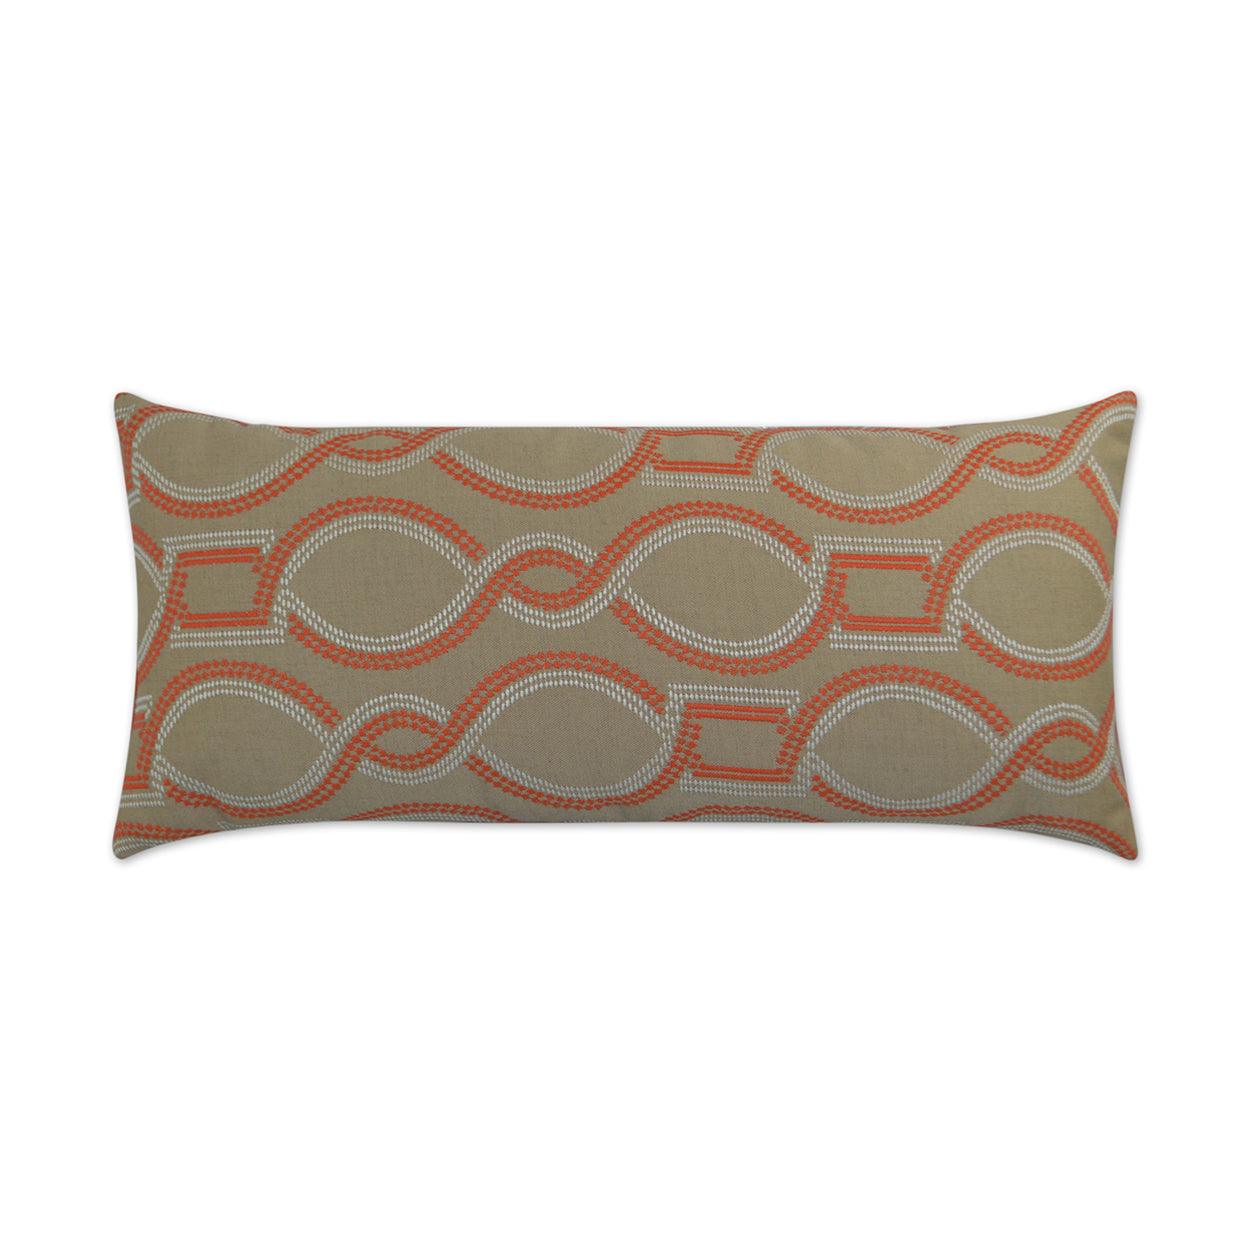 LOOMLAN Outdoor - Outdoor Twist Lumbar Pillow - Orange - Outdoor Pillows